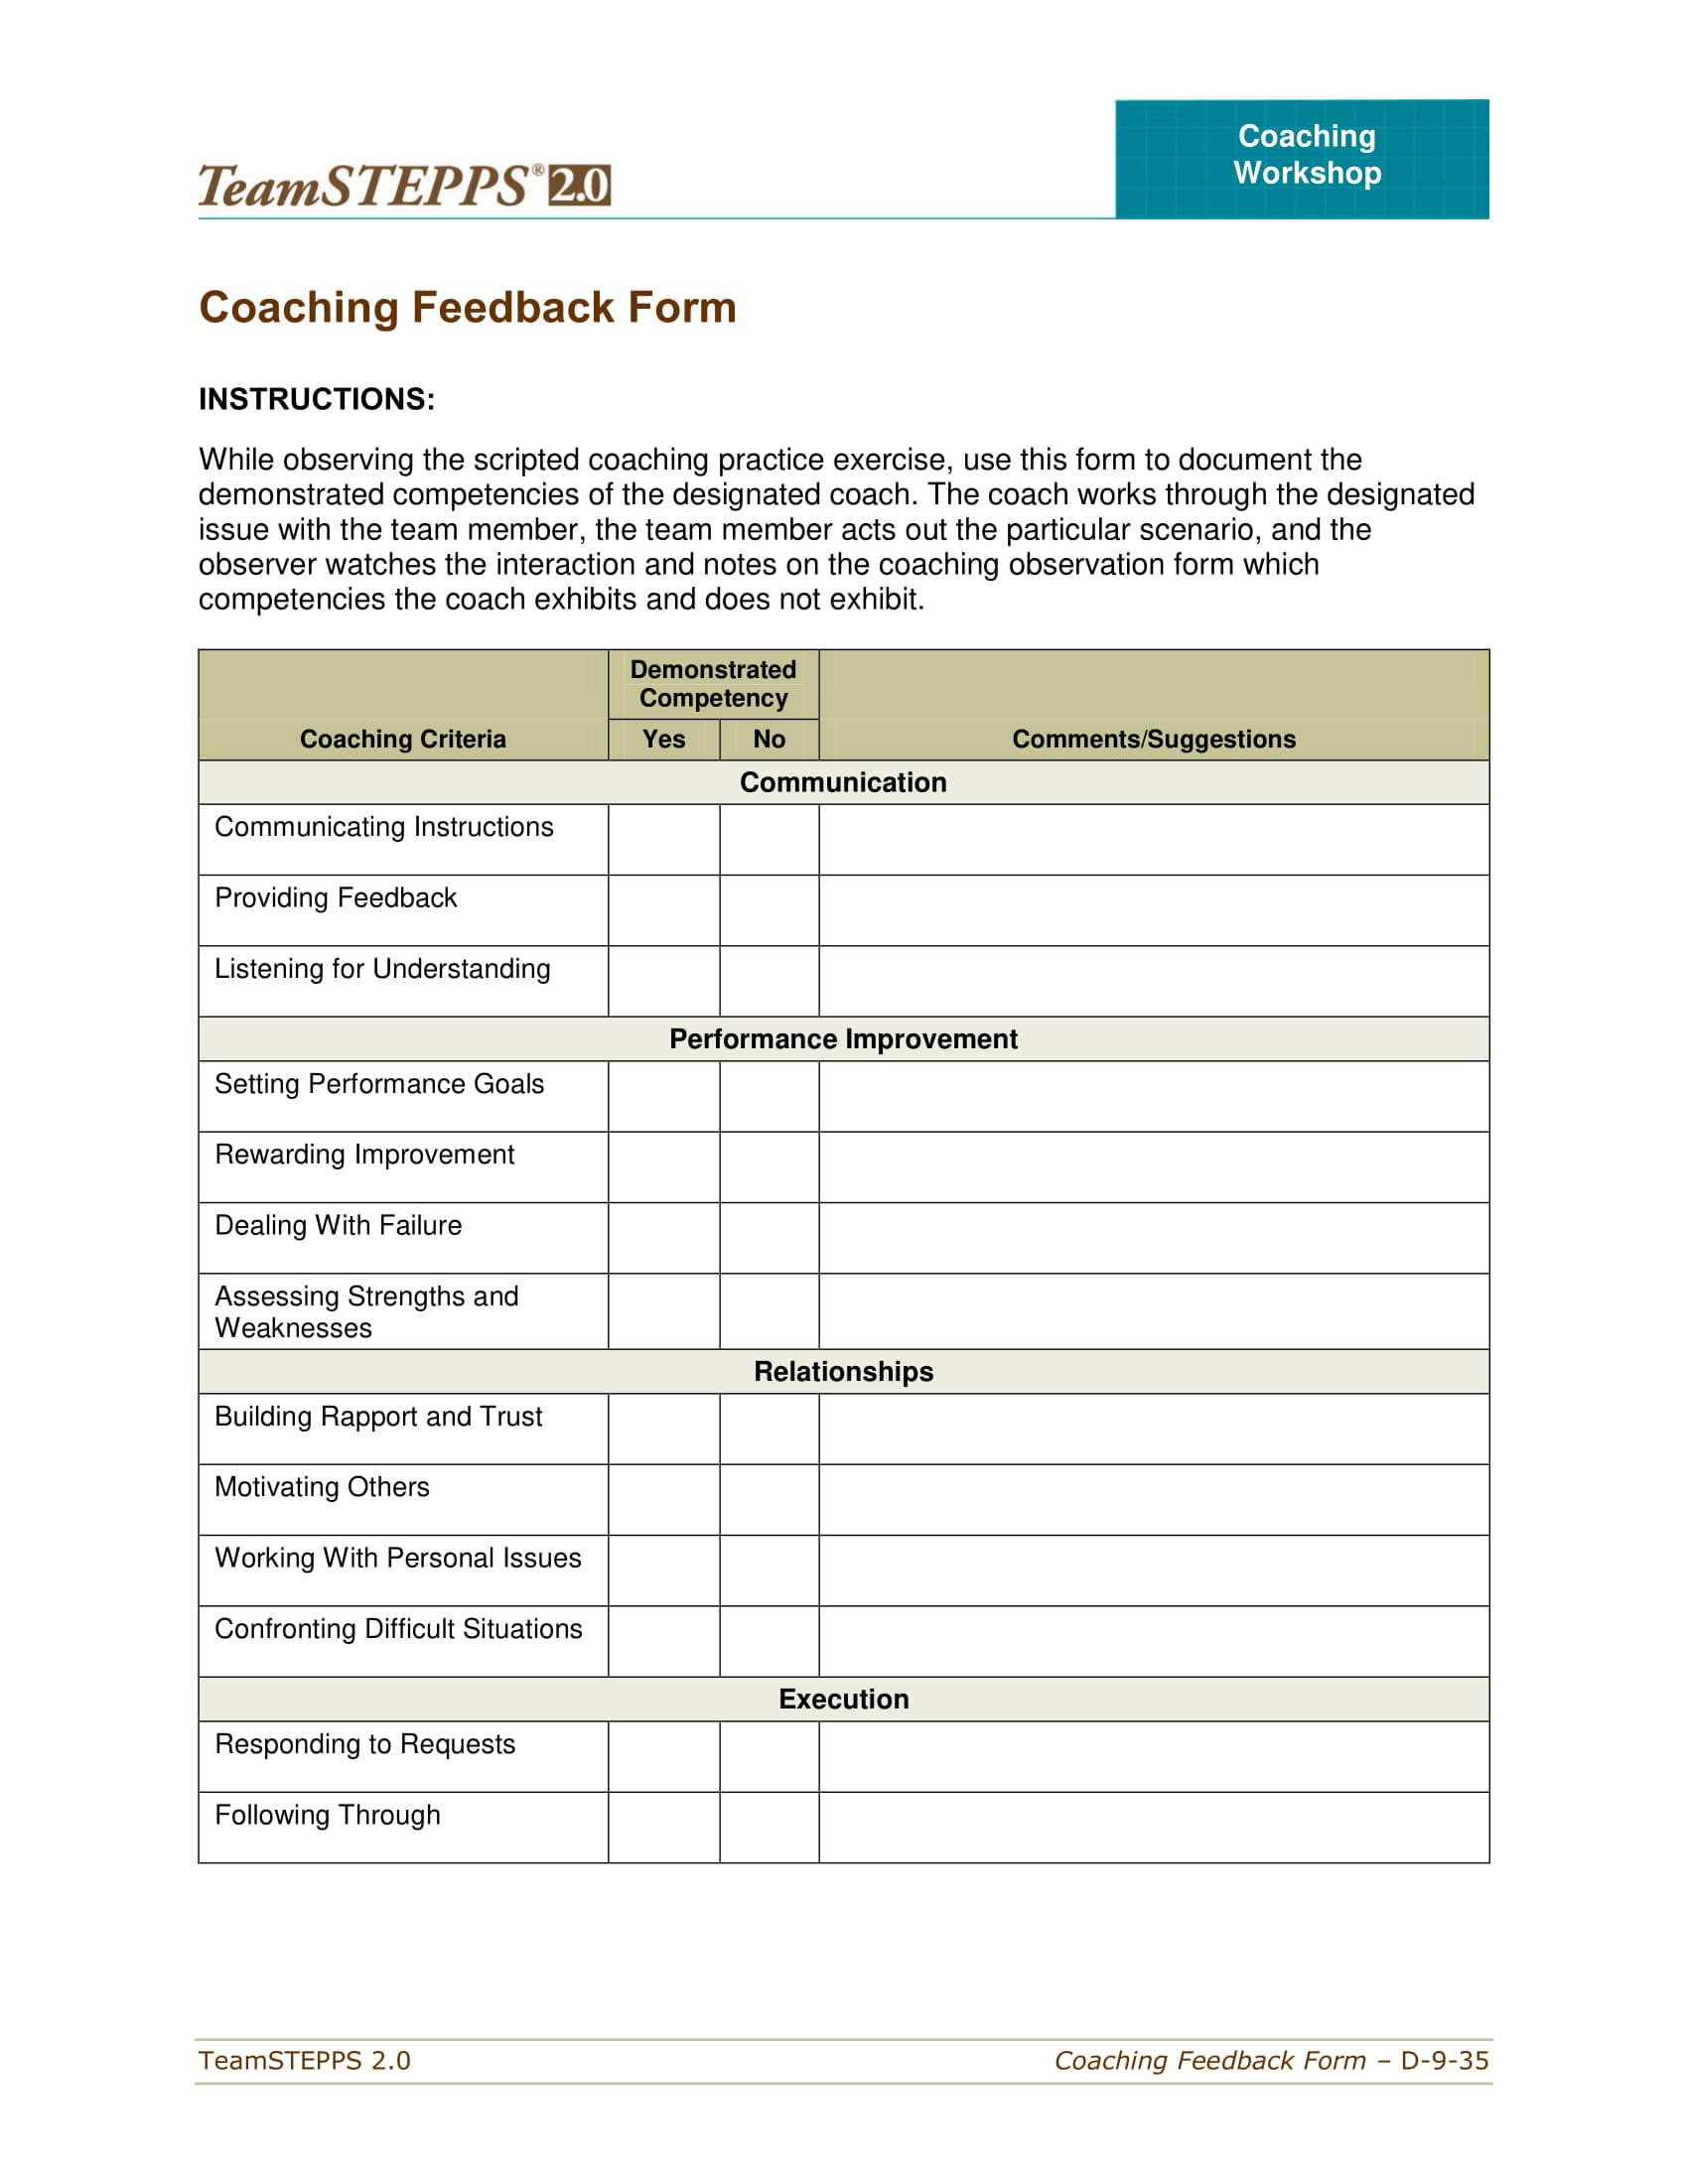 Coaching Checklist Template